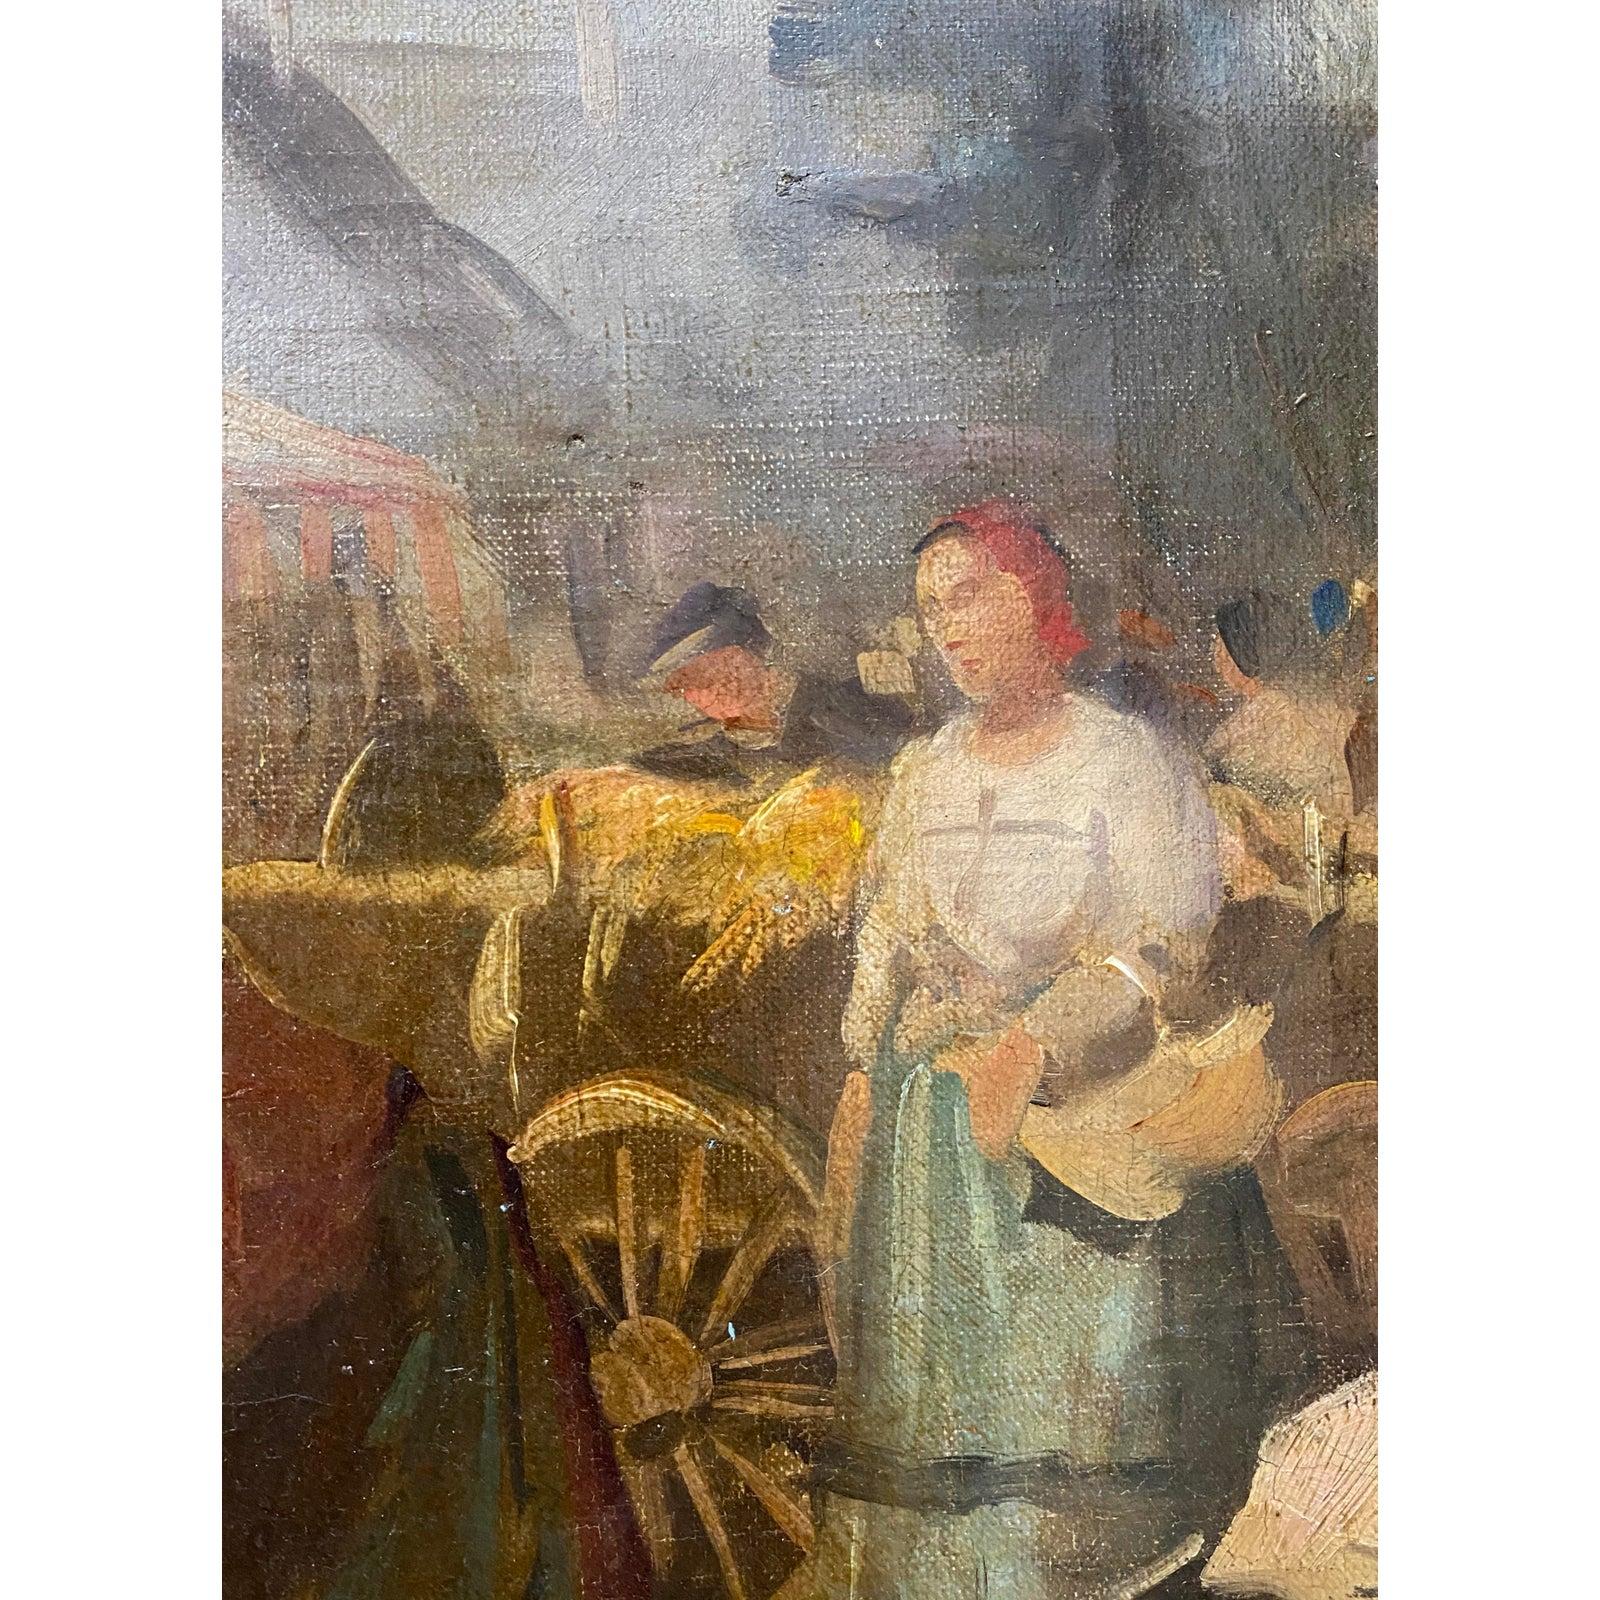 Lajos Szanto (1889-1965) Original Oil Painting c.1930s

A bustling market scene.

Oil on canvas. Dimensions 30.5